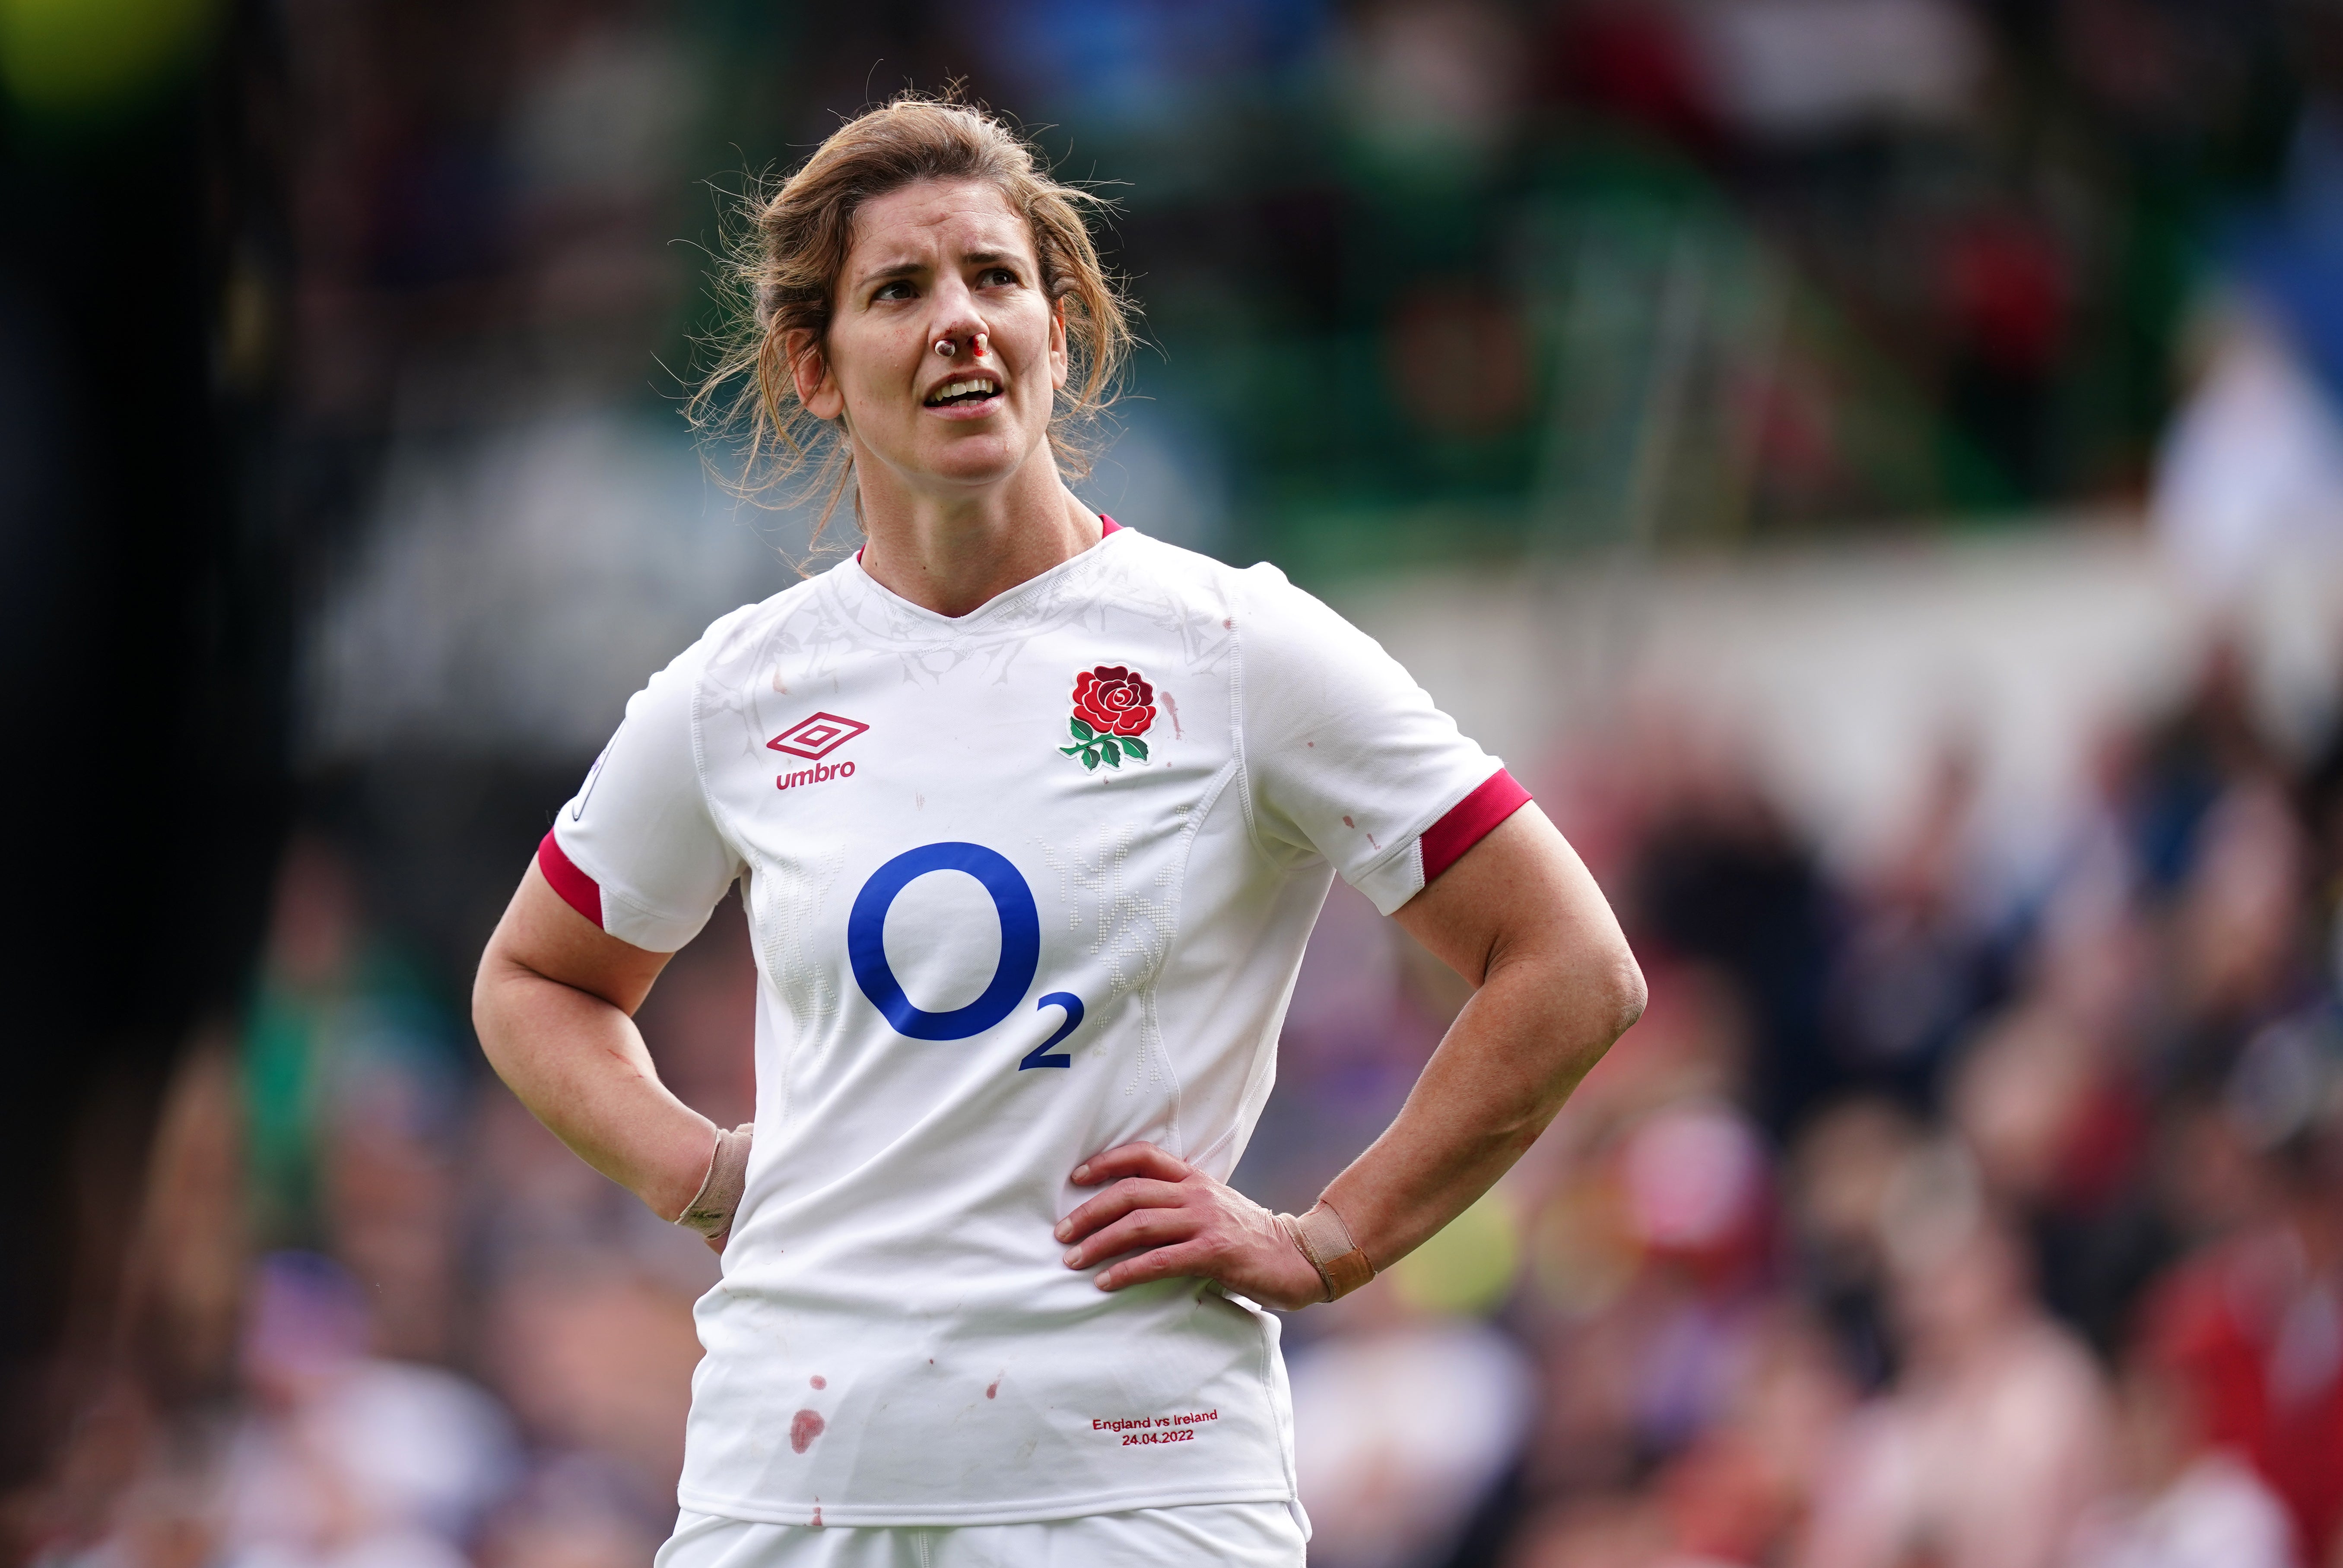 England women’s rugby captain Sarah Hunter